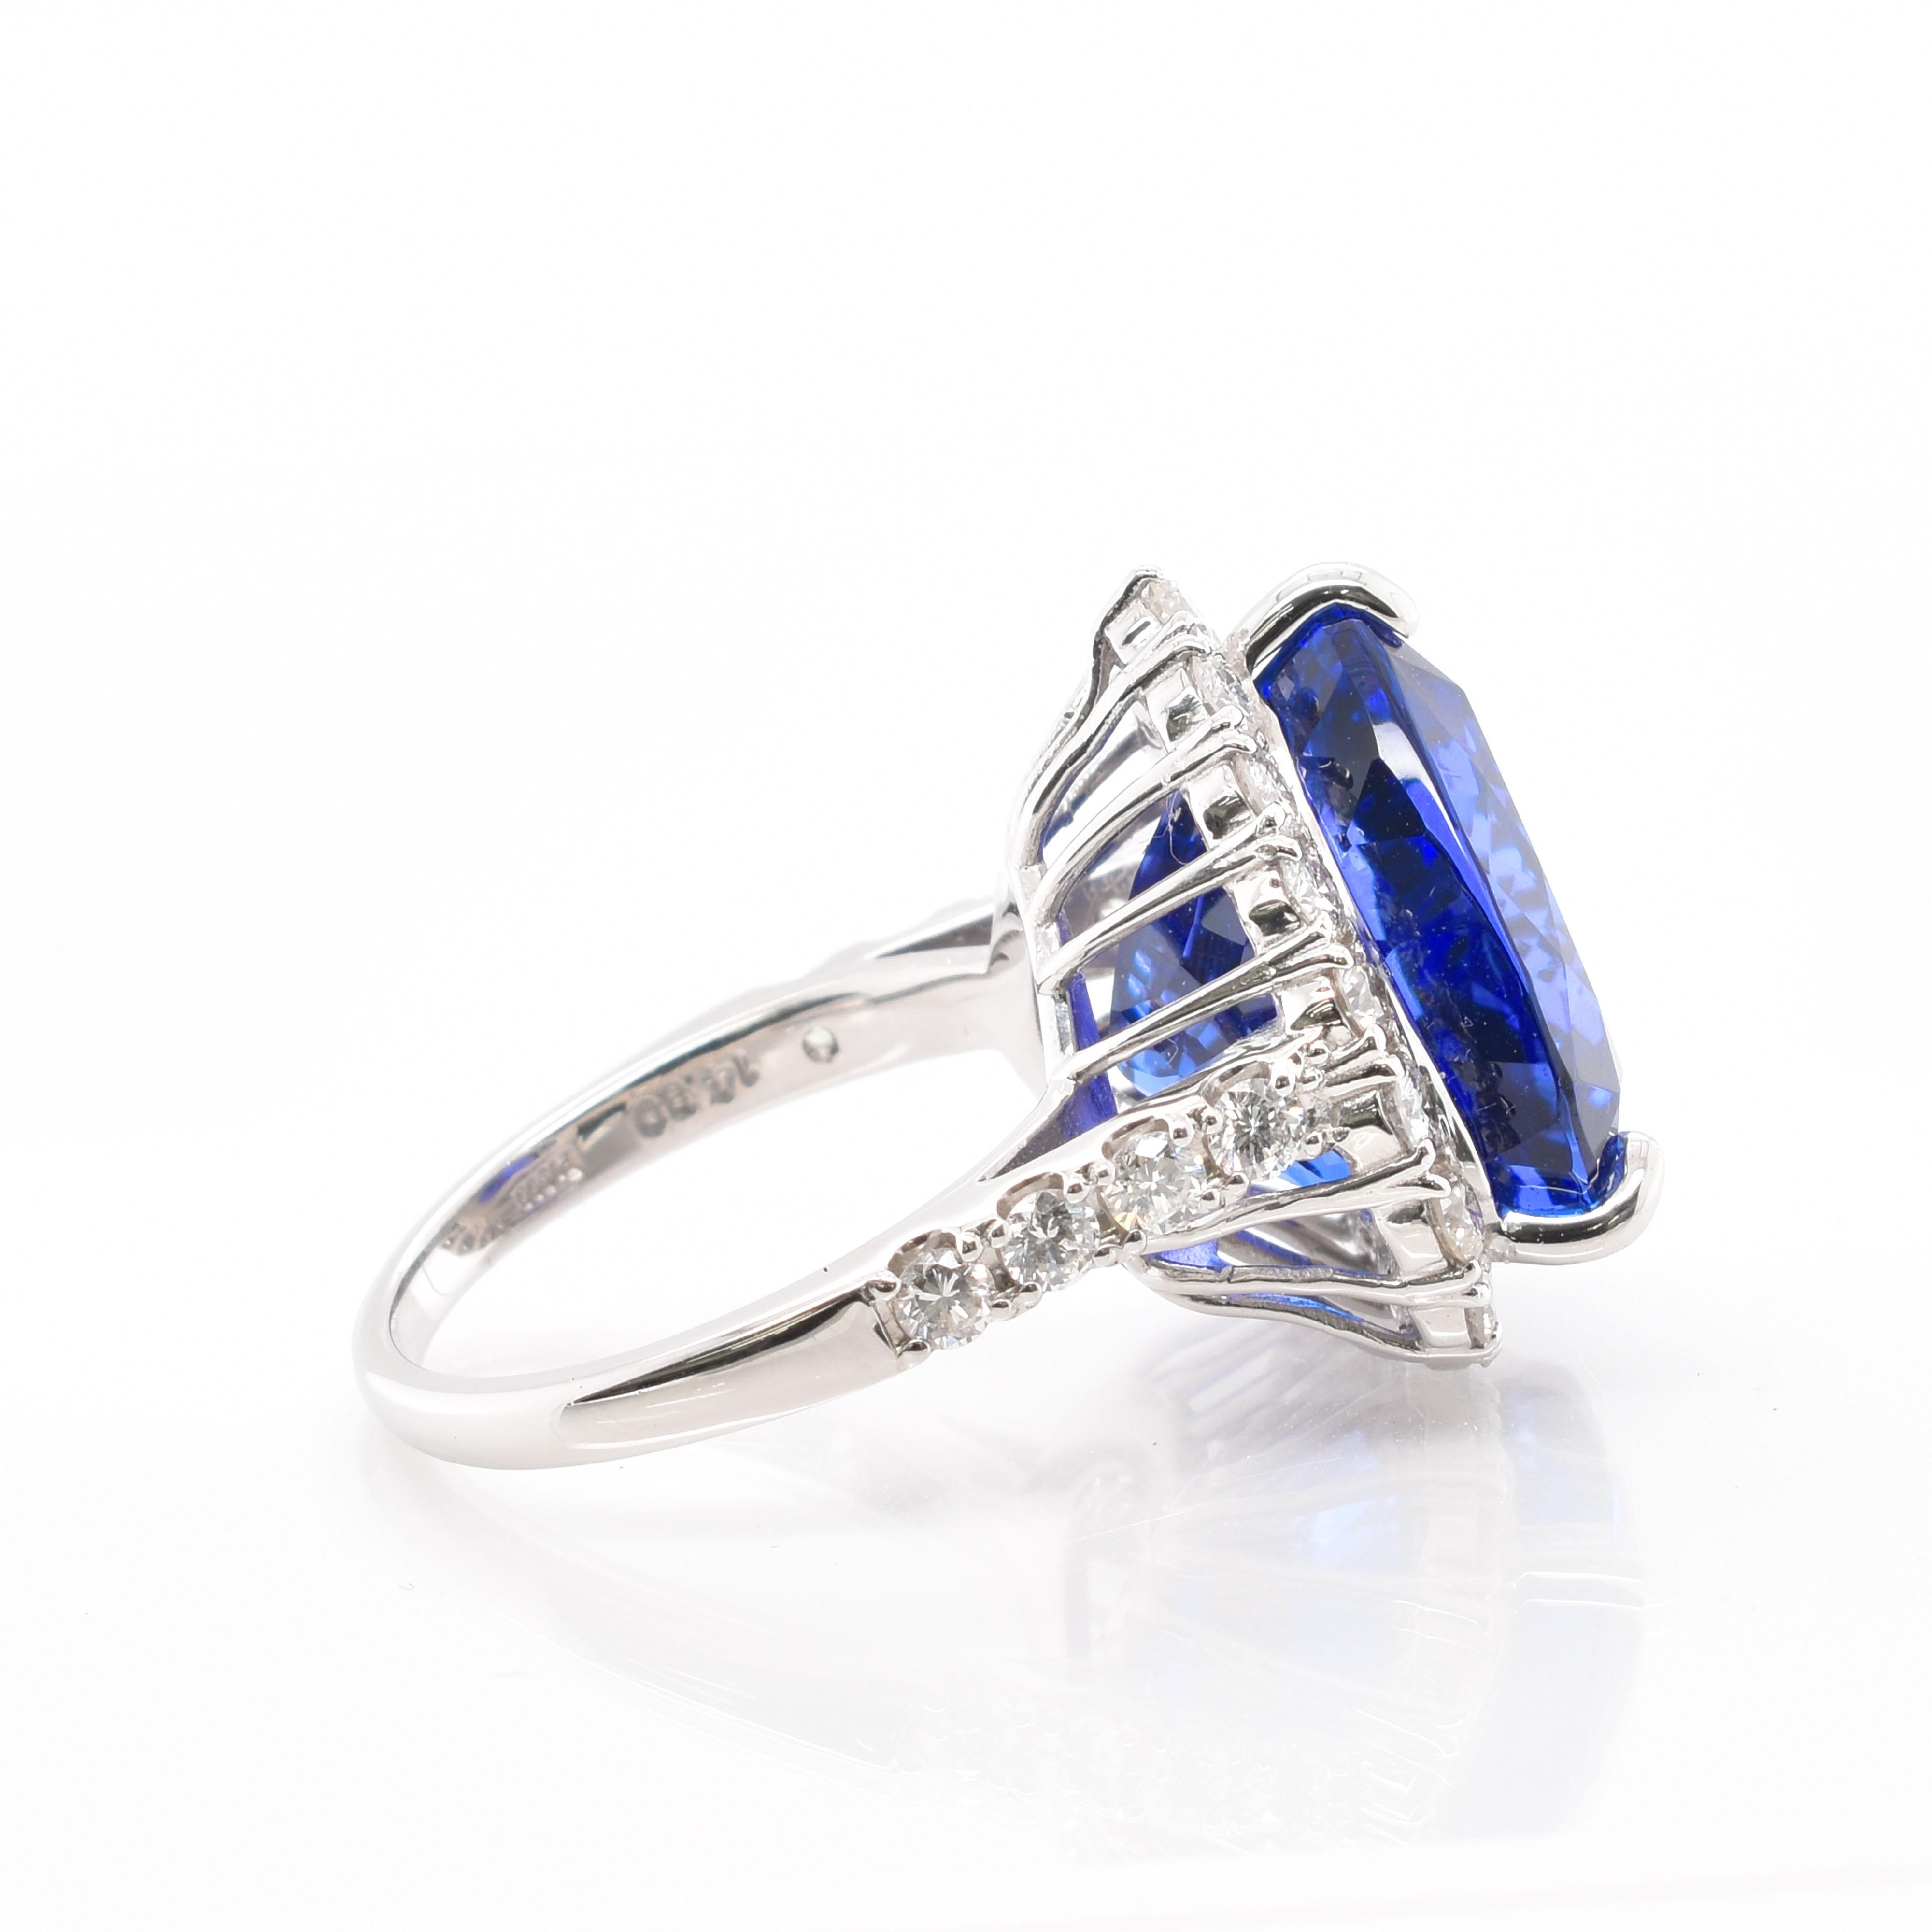 Modern 14.80 Carat Heart-Shaped Tanzanite and Diamond Ring Set in Platinum